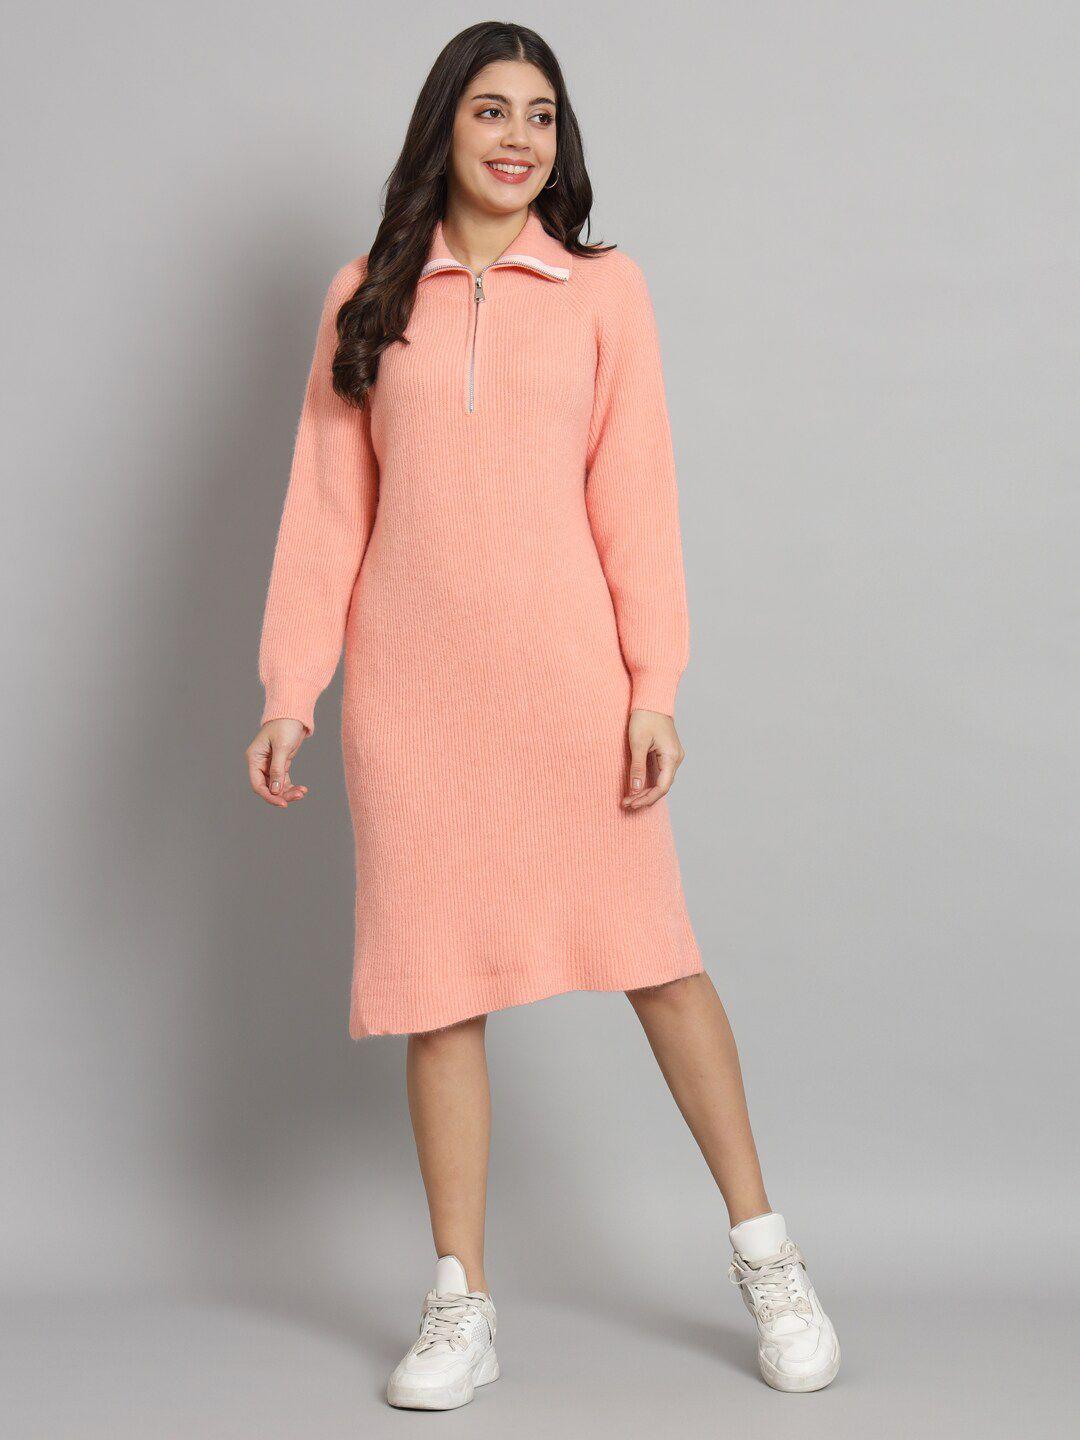 broowl peach-coloured woollen dress